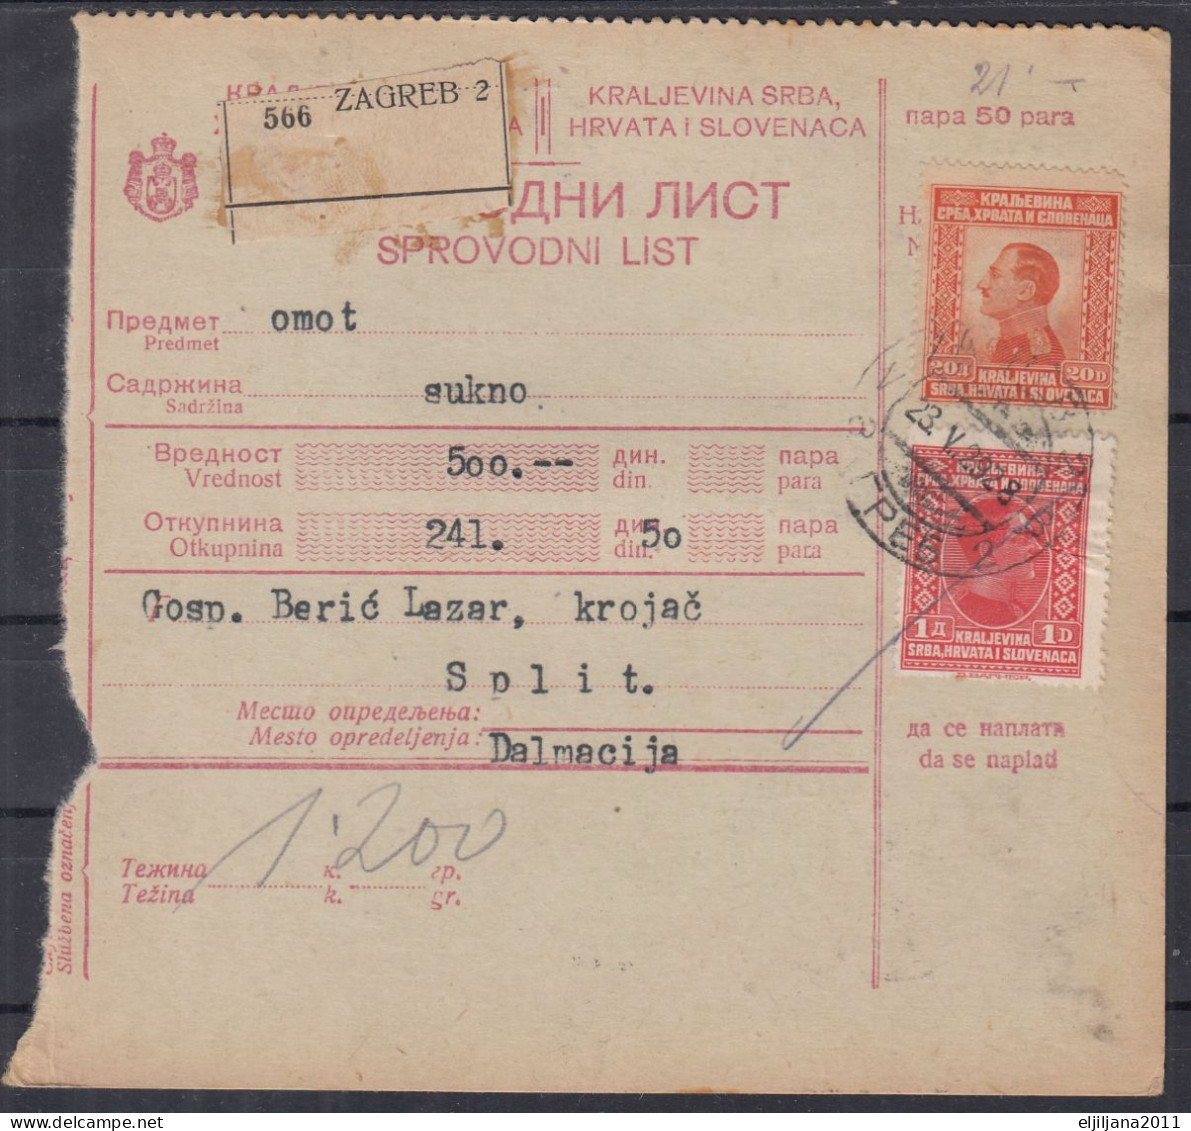 ⁕ Kingdom Of Yugoslavia 1928 ⁕ Parcel Post - Receipt ( Sprovodni List ) Sukno (cloth) ⁕ Zagreb To Split, Dalmatia - Covers & Documents